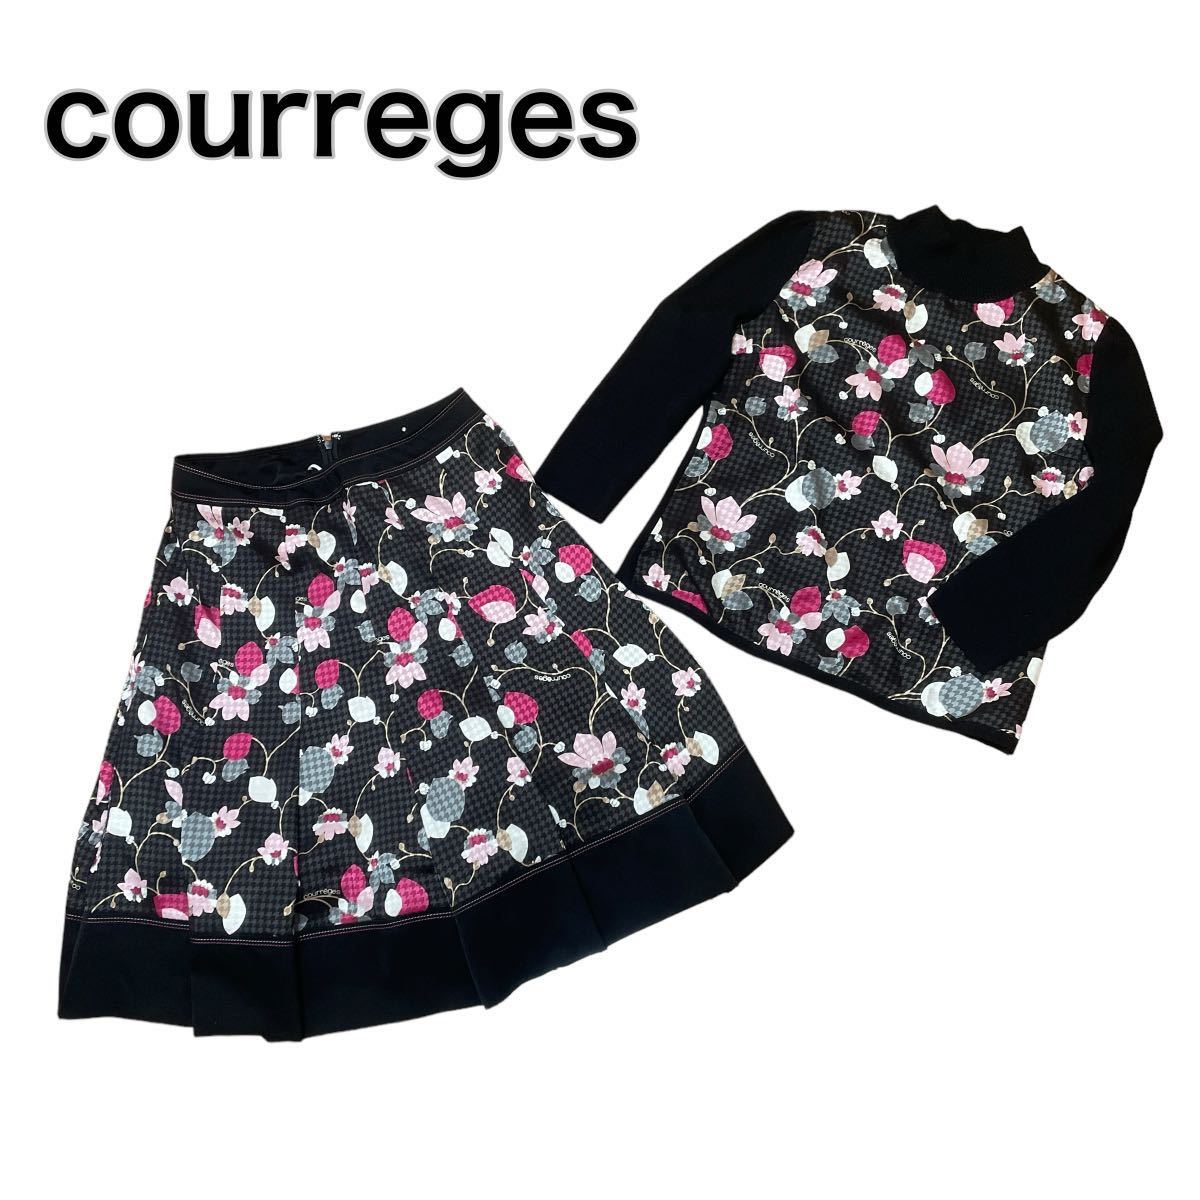 courreges Courreges setup skirt floral print 40 L